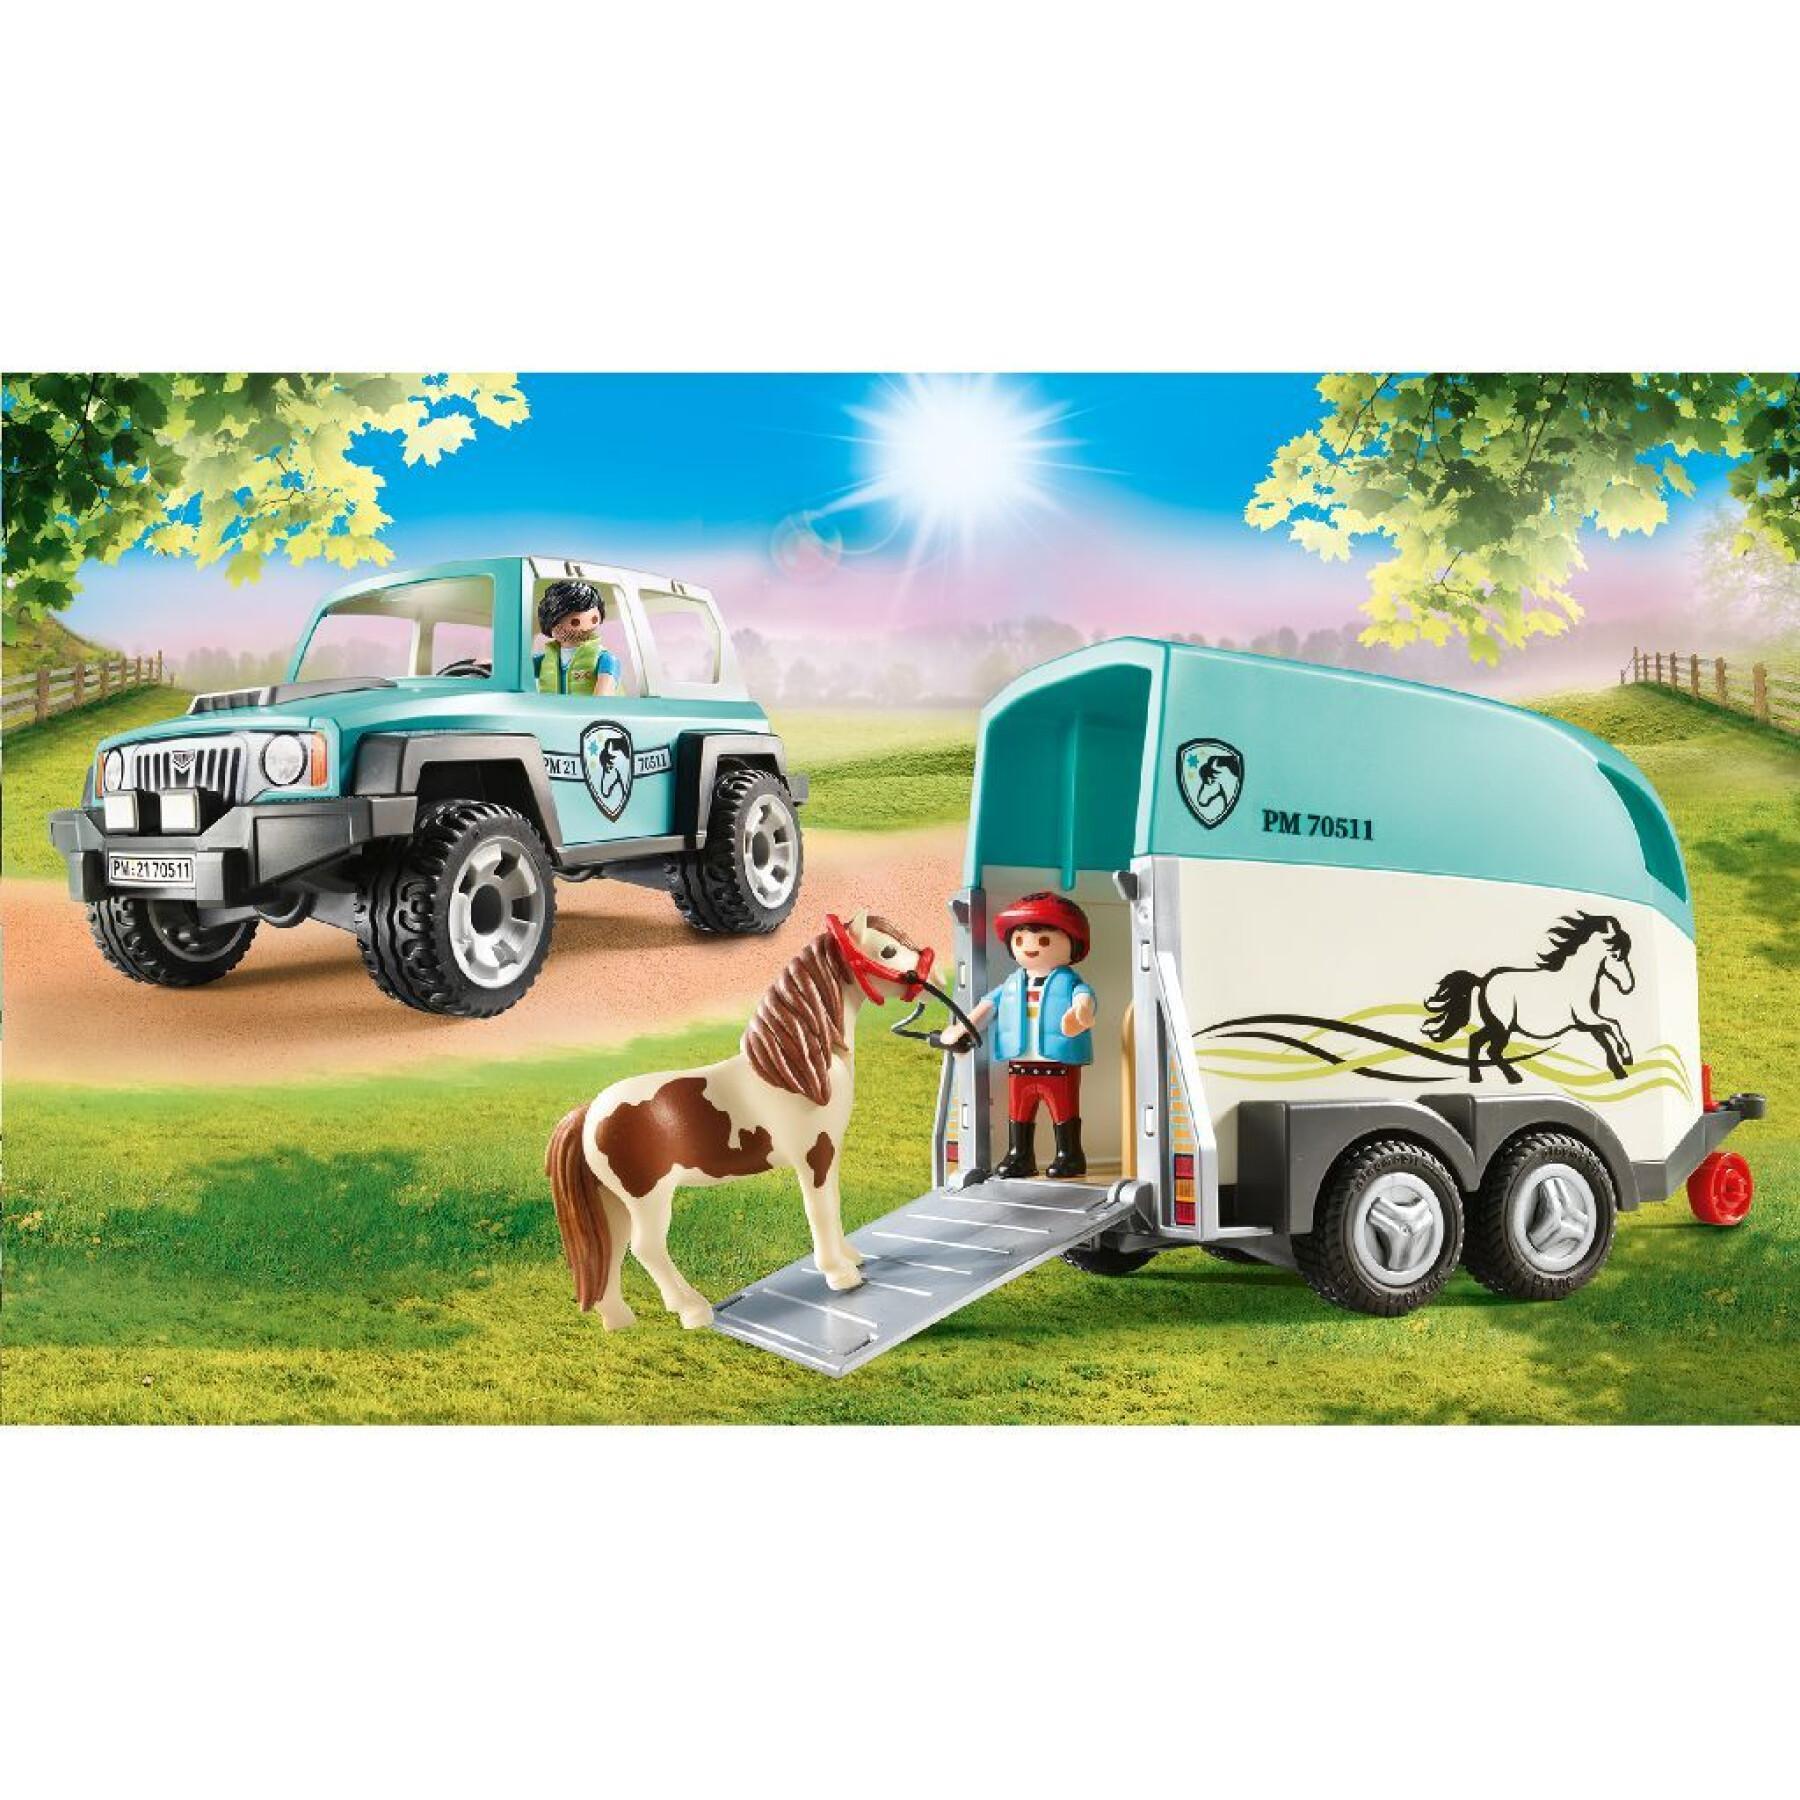 Car and pony van building sets Playmobil